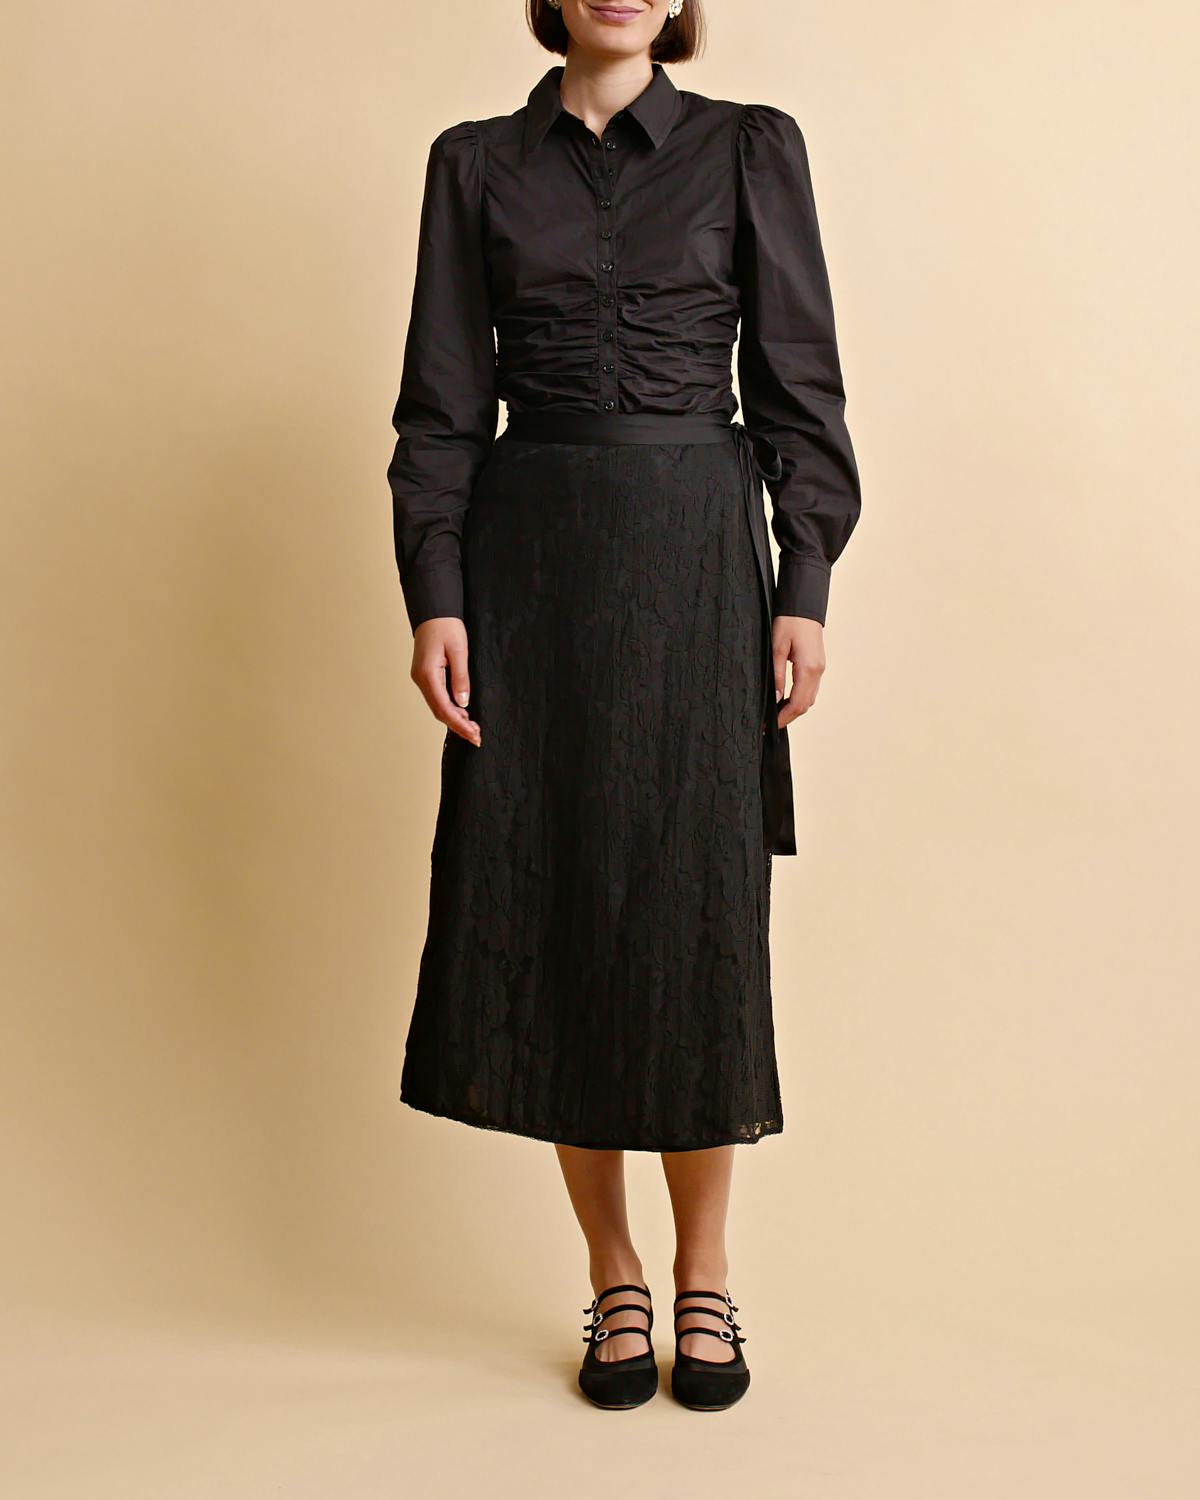 Lace Skirt, Black. Image #2